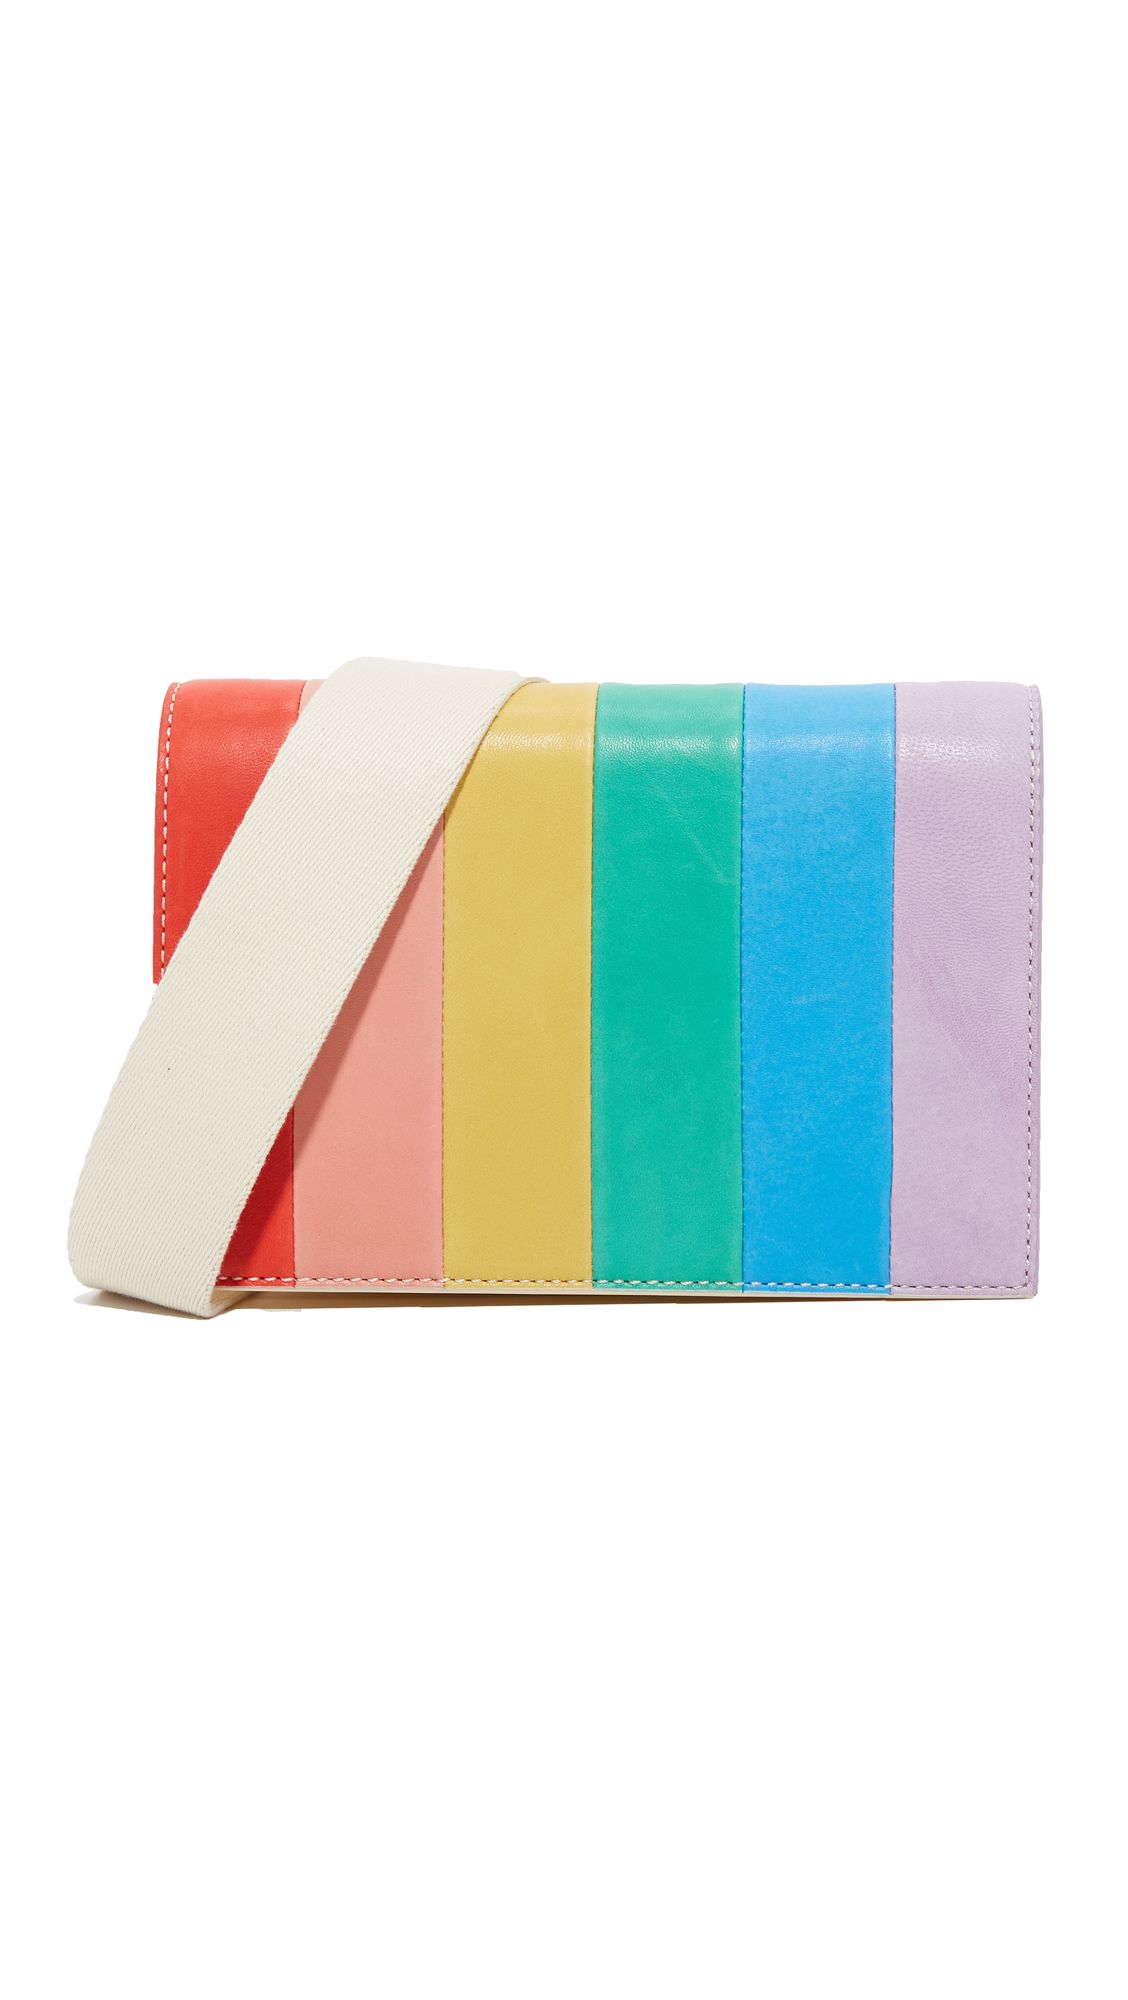 Rainbow Leather Cross Body Bag | Shopbop